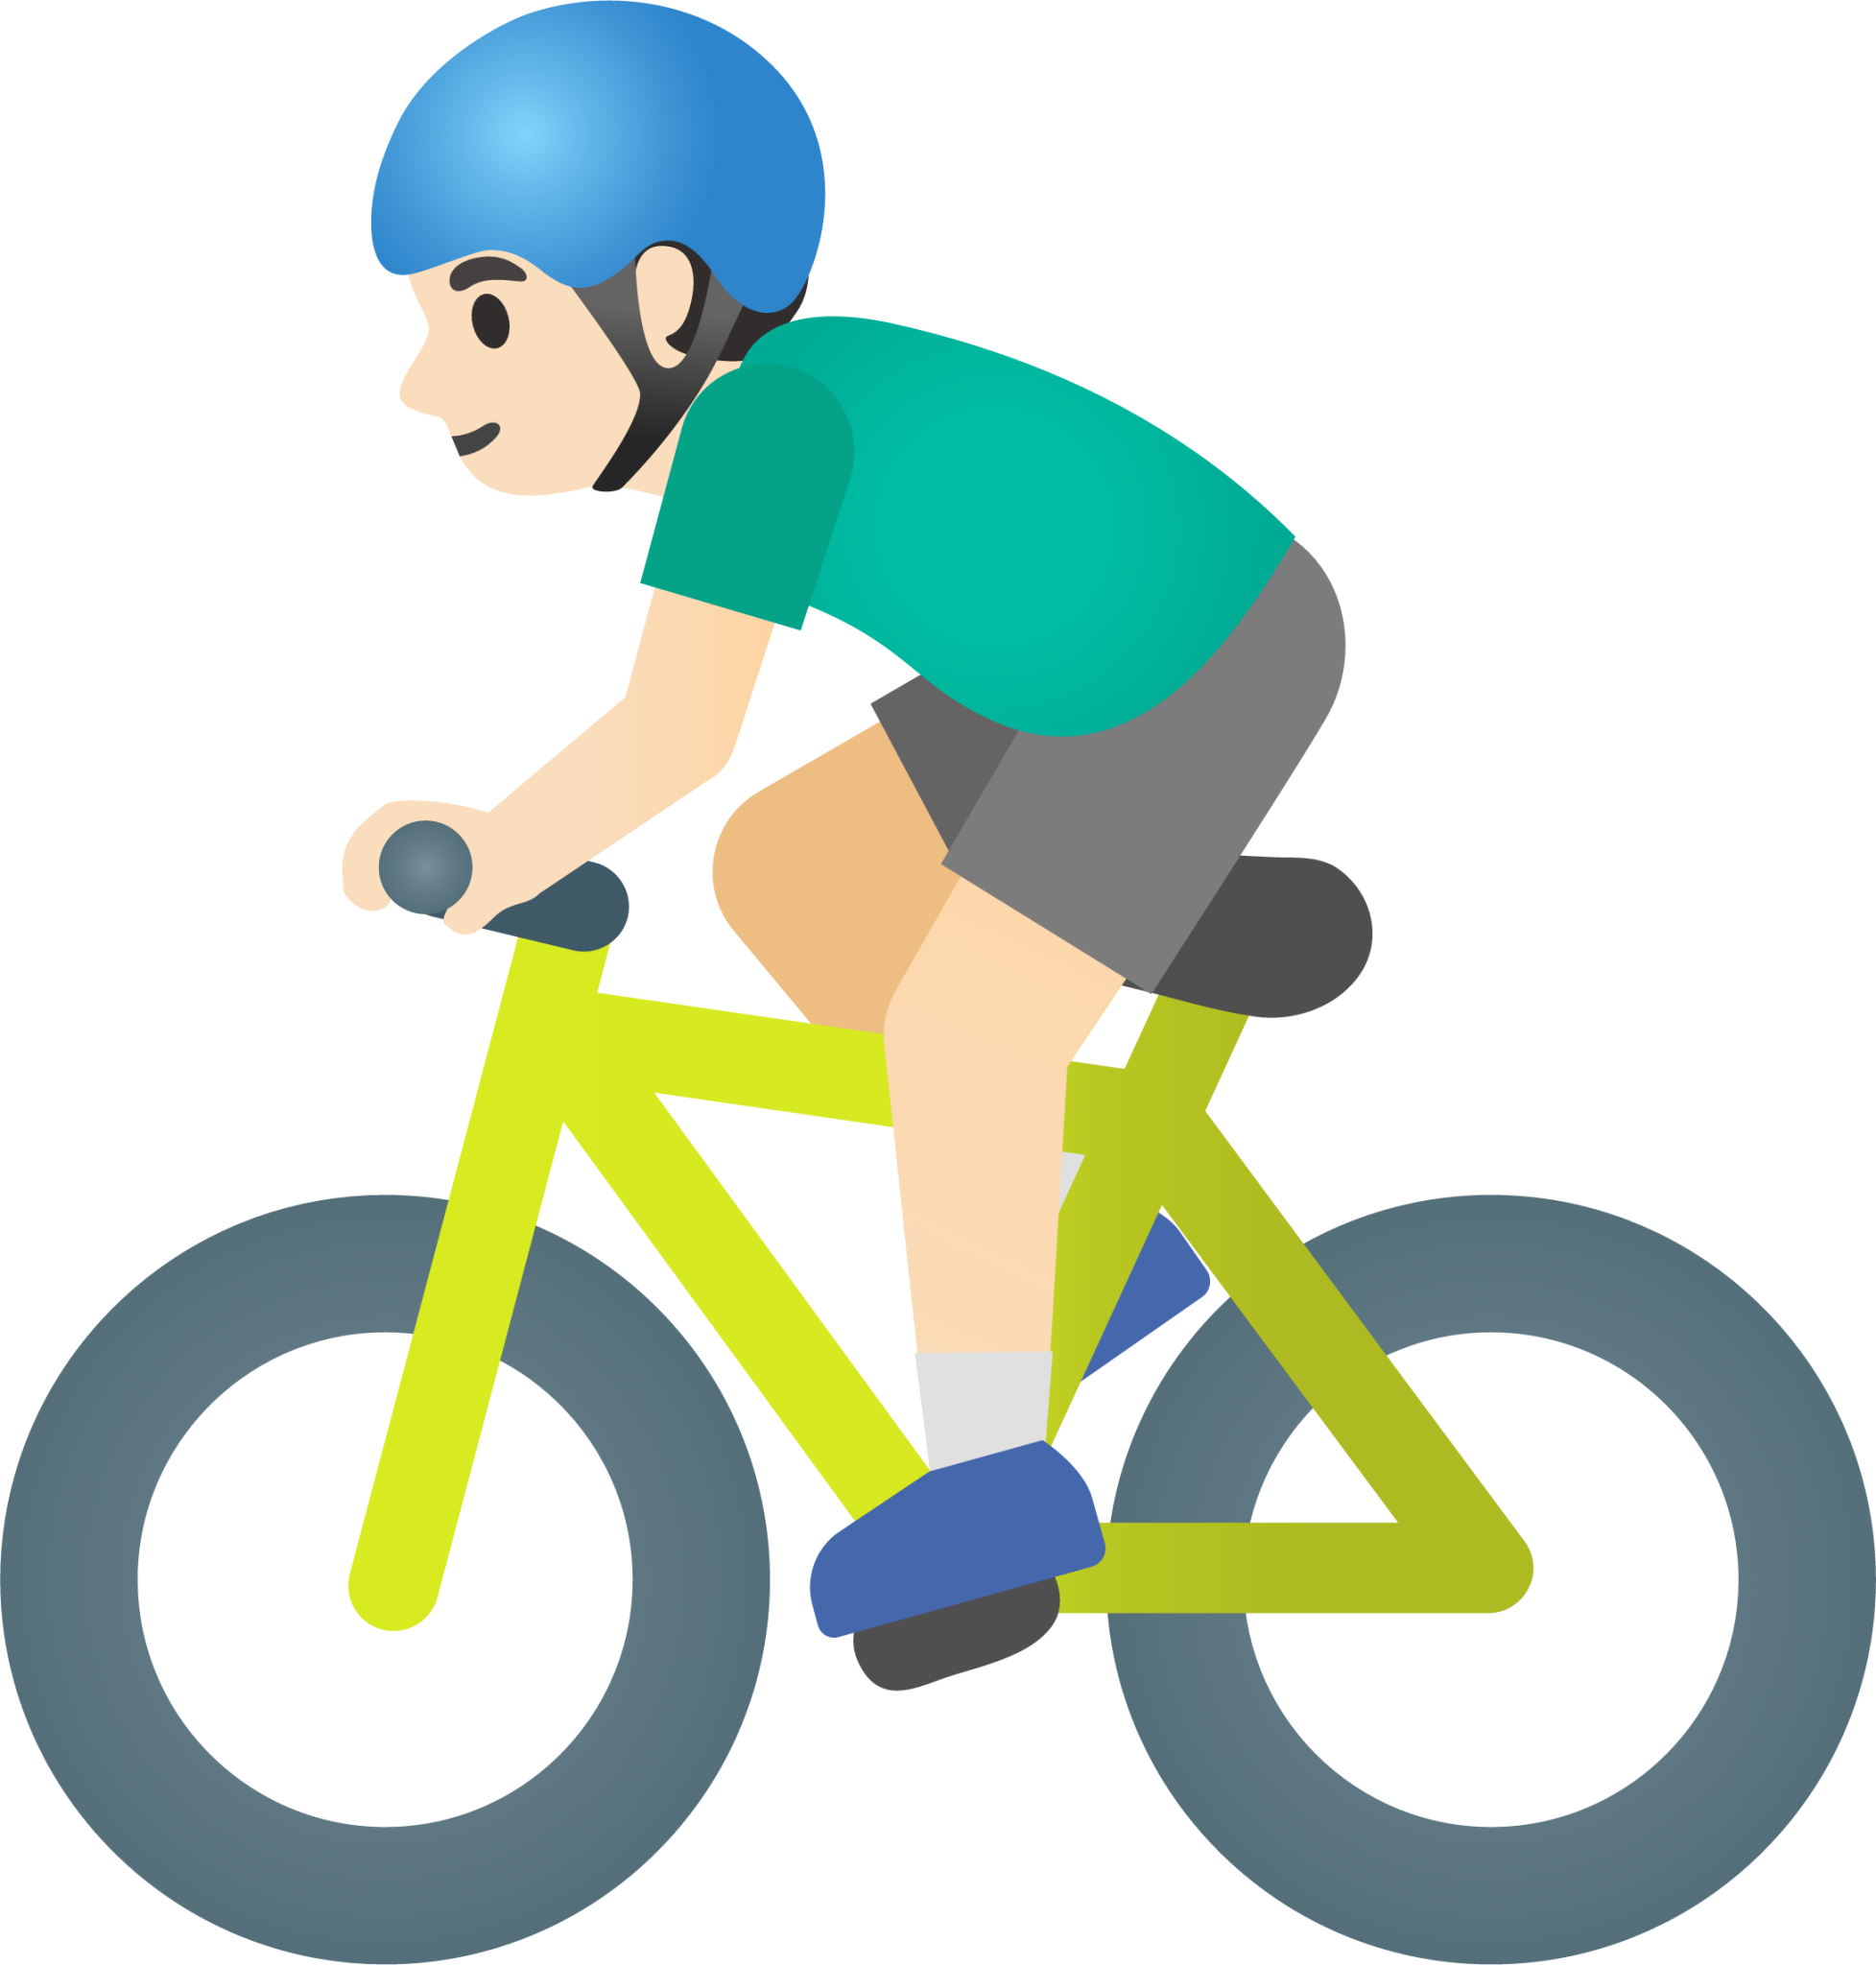 man biking: light skin tone emoji